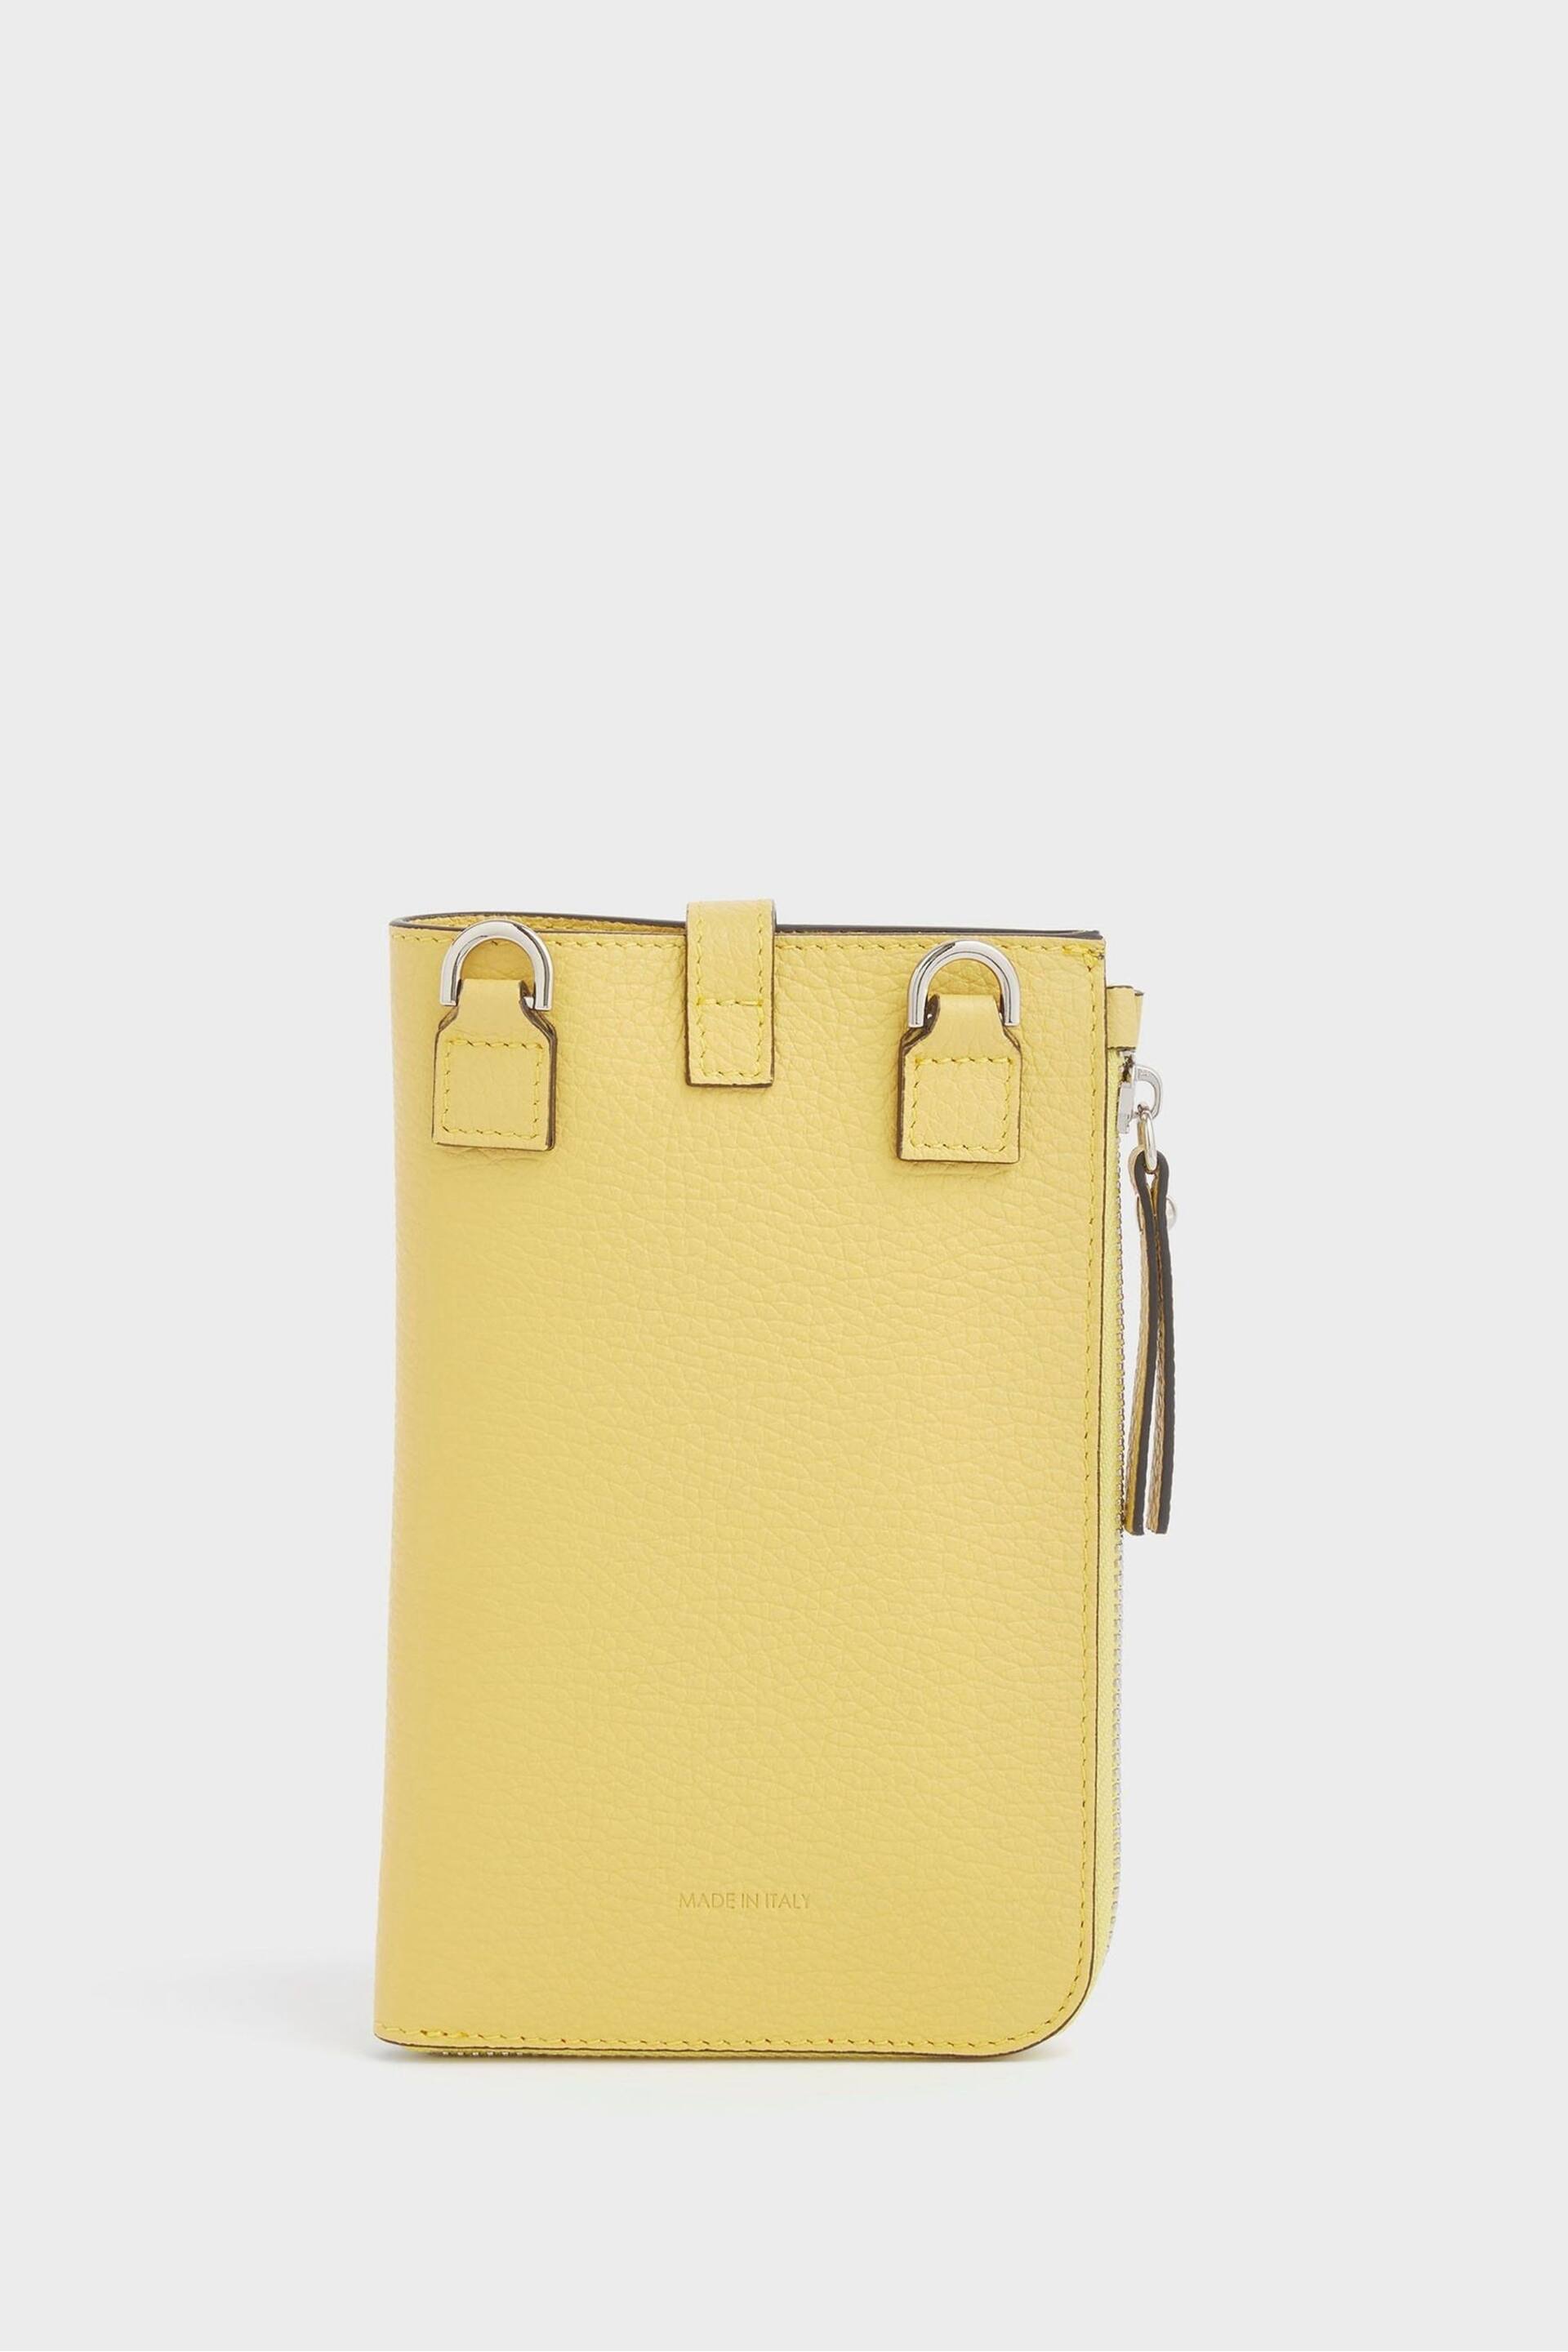 Osprey London The Electra Italian Leather Lanyard Phone Bag - Image 3 of 5